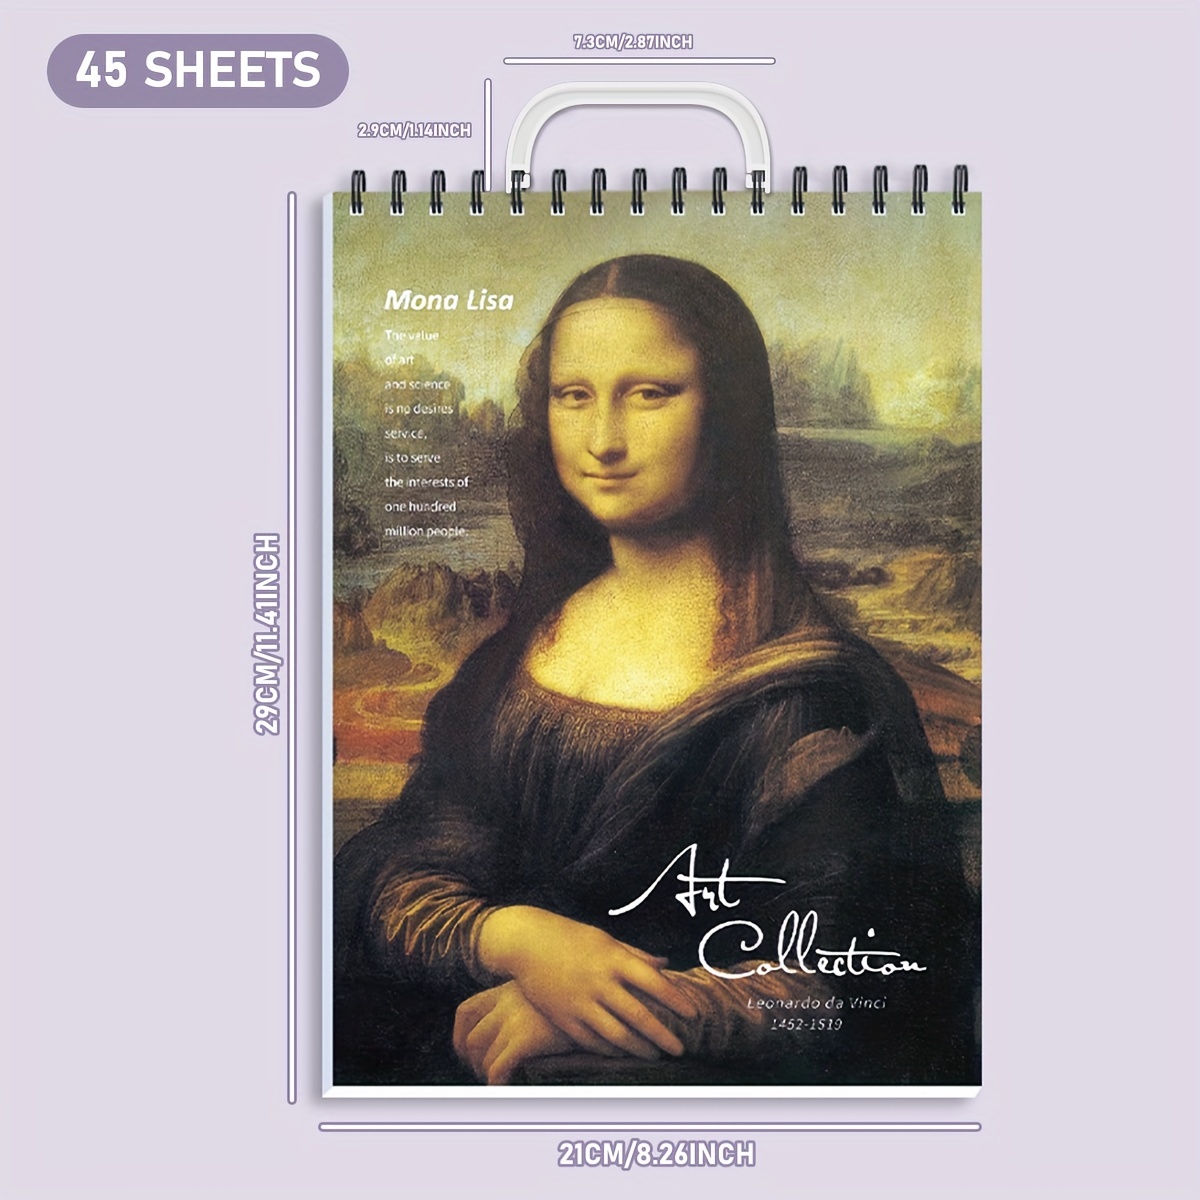 Quaderno schizzi - sketchbook da disegno 14x21,6 cm - 80f.